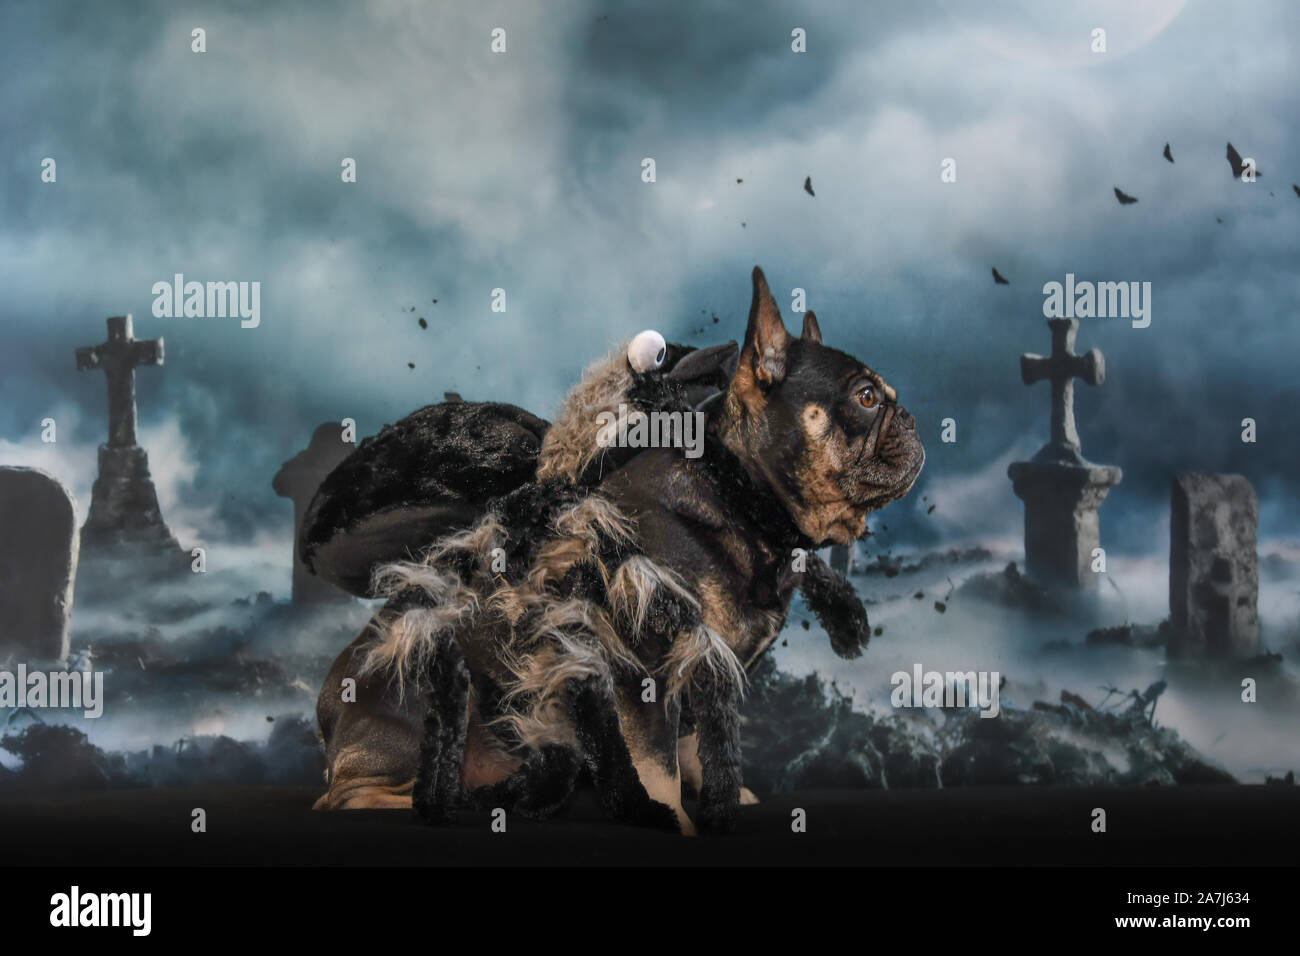 French bulldog Halloween photo shoot against spooky backdrop Stock Photo